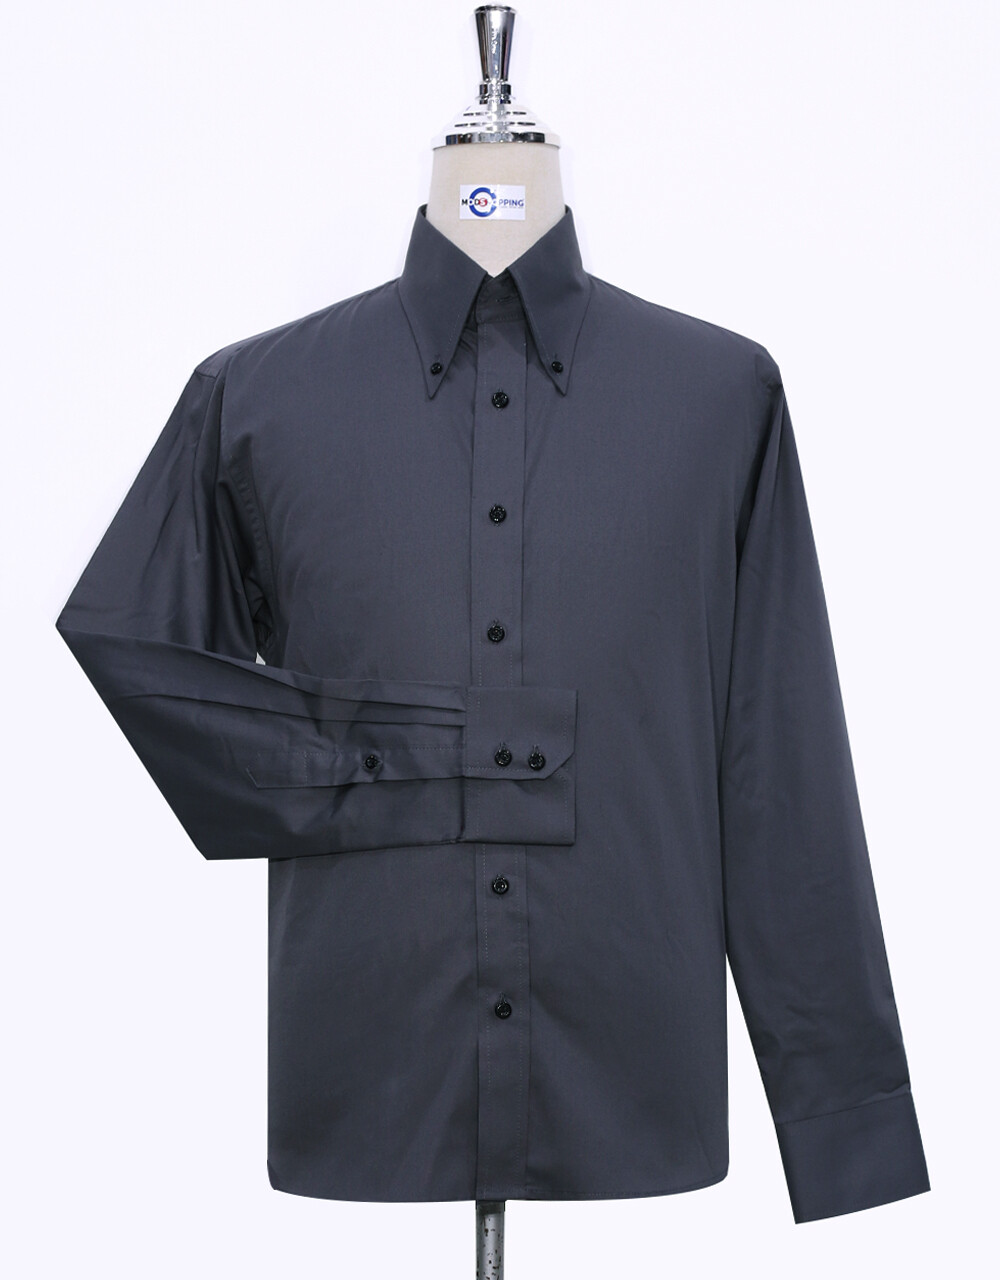 Button-Down Shirt | Charcoal Grey Color Shirt